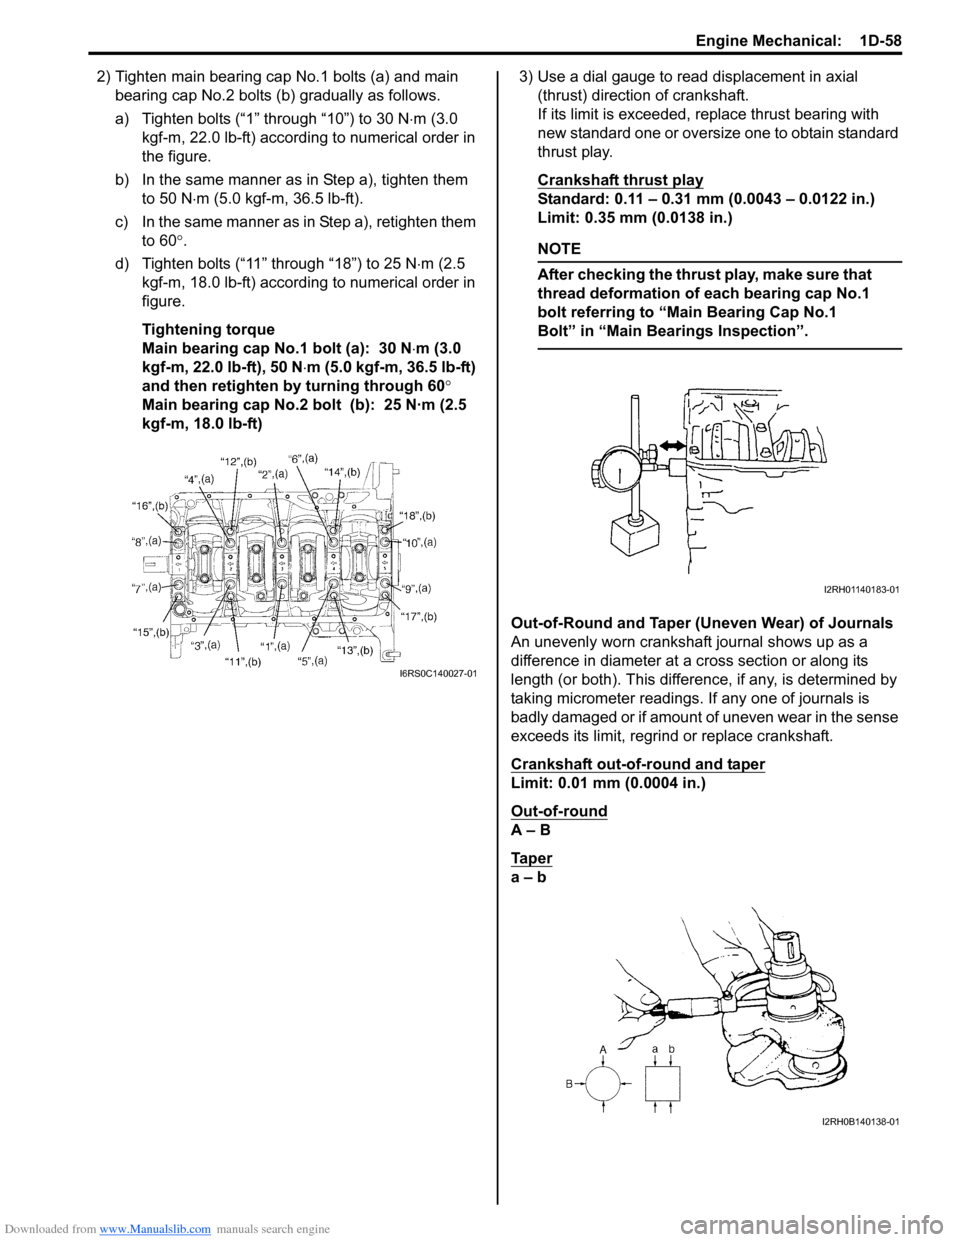 SUZUKI SWIFT 2008 2.G Service Workshop Manual Downloaded from www.Manualslib.com manuals search engine Engine Mechanical:  1D-58
2) Tighten main bearing cap No.1 bolts (a) and main bearing cap No.2 bolts (b ) gradually as follows.
a) Tighten bolt